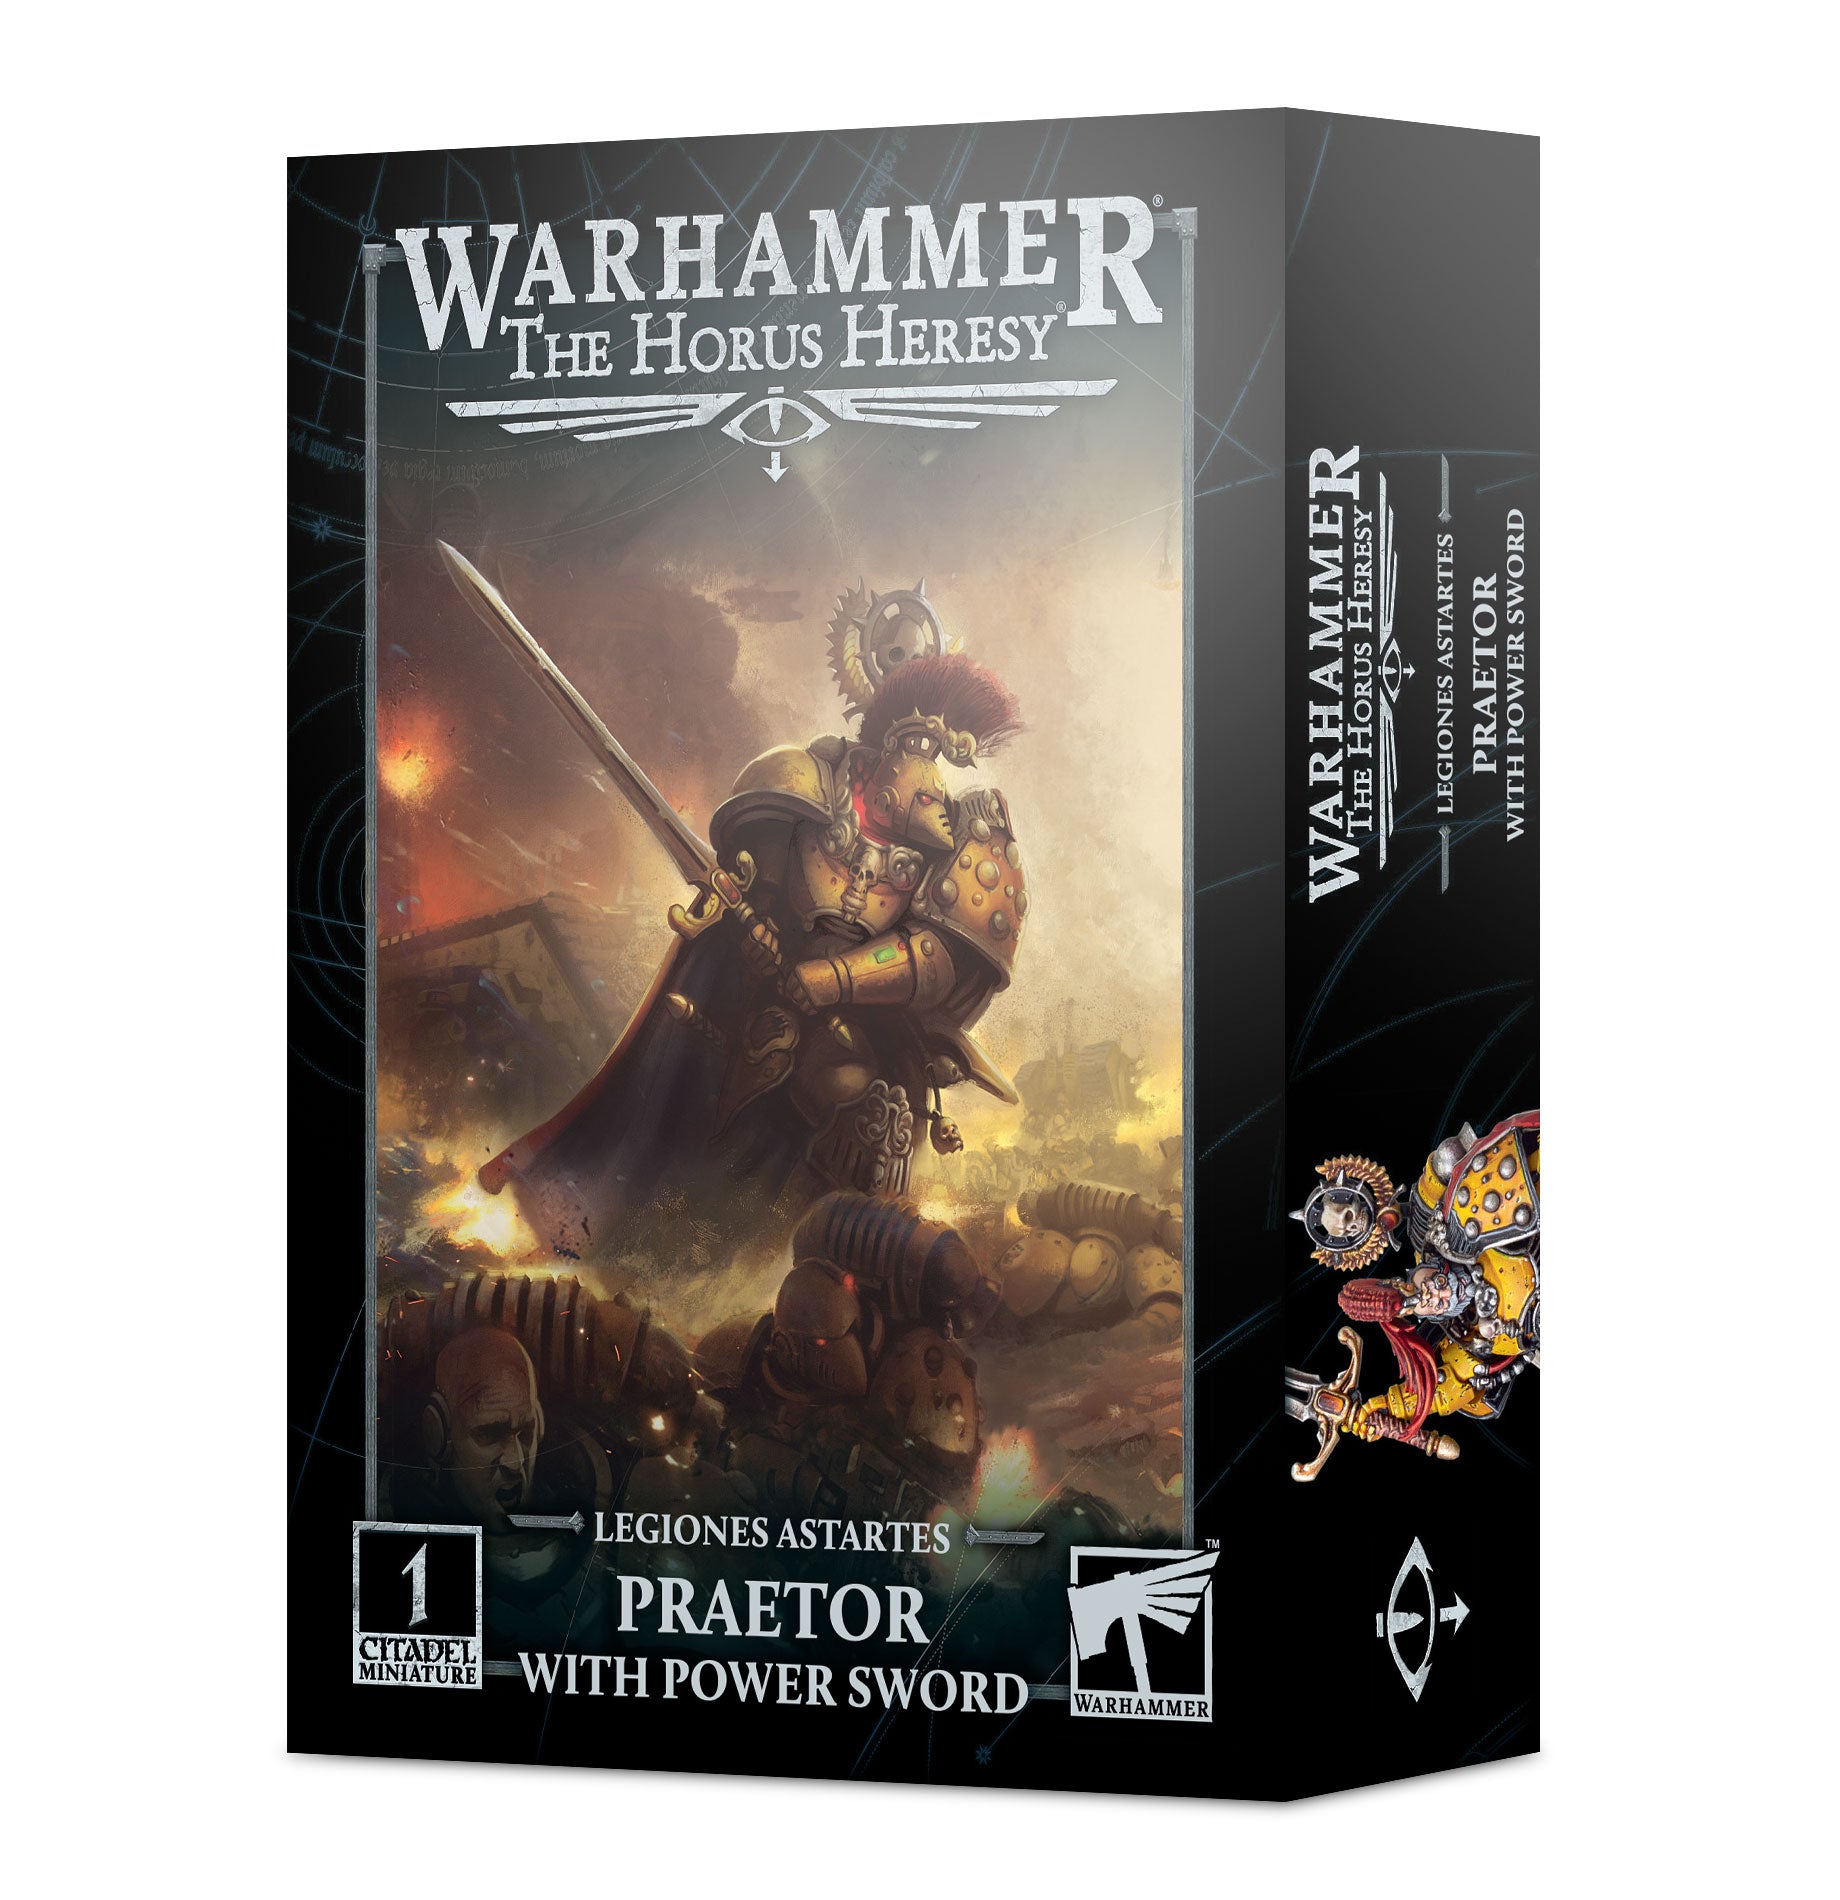 Warhammer Horus Heresy: Legiones Astartes Praetor with Power Sword